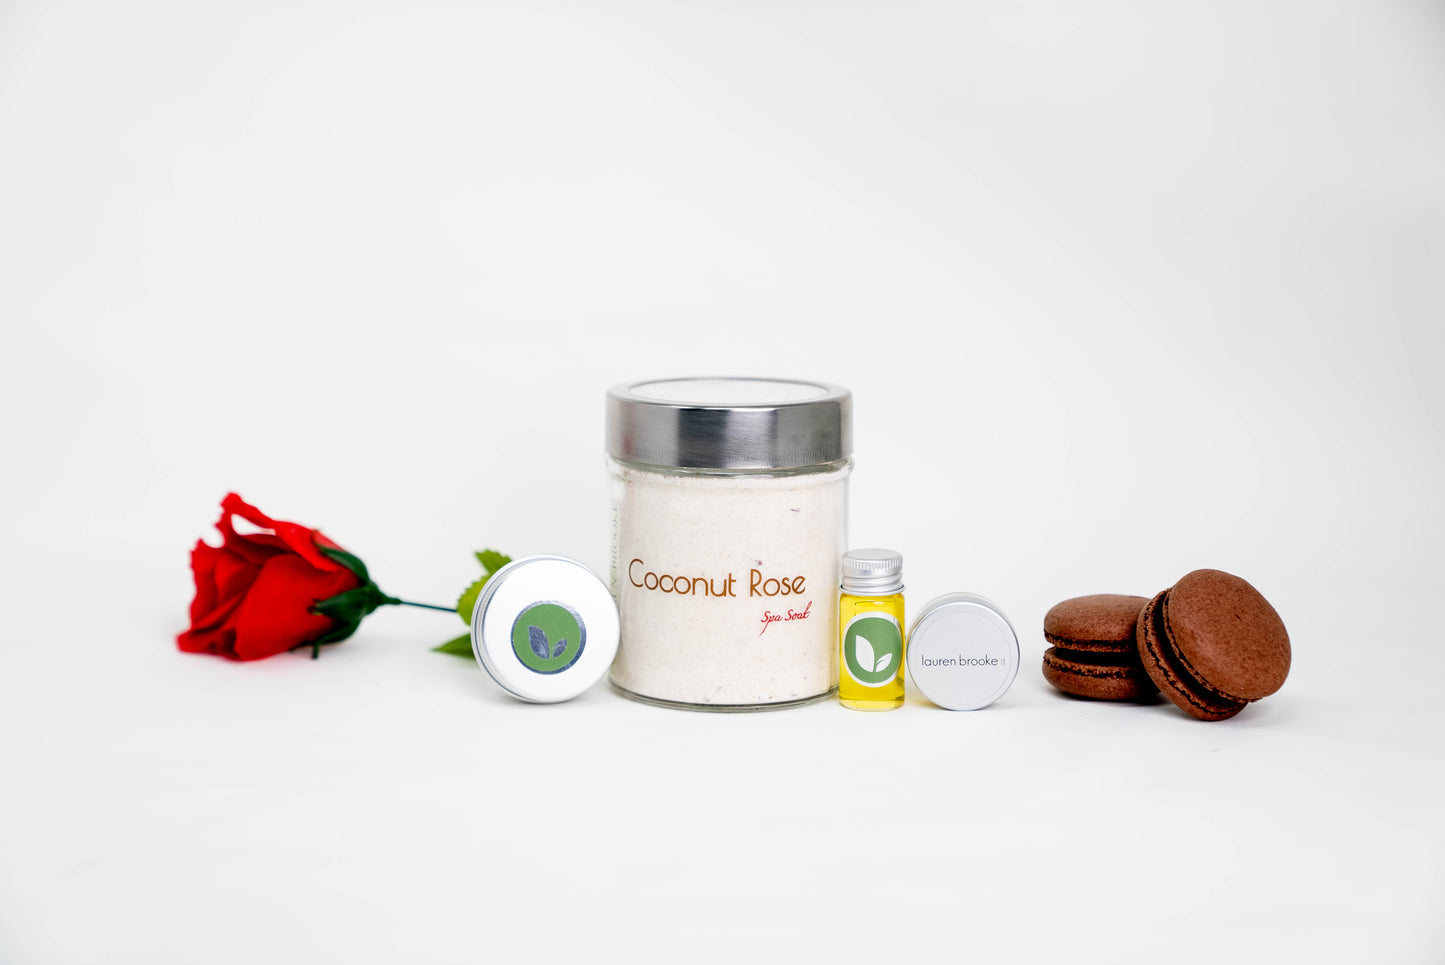 Roses and Chocolates Aromatherapy Kit 🍫